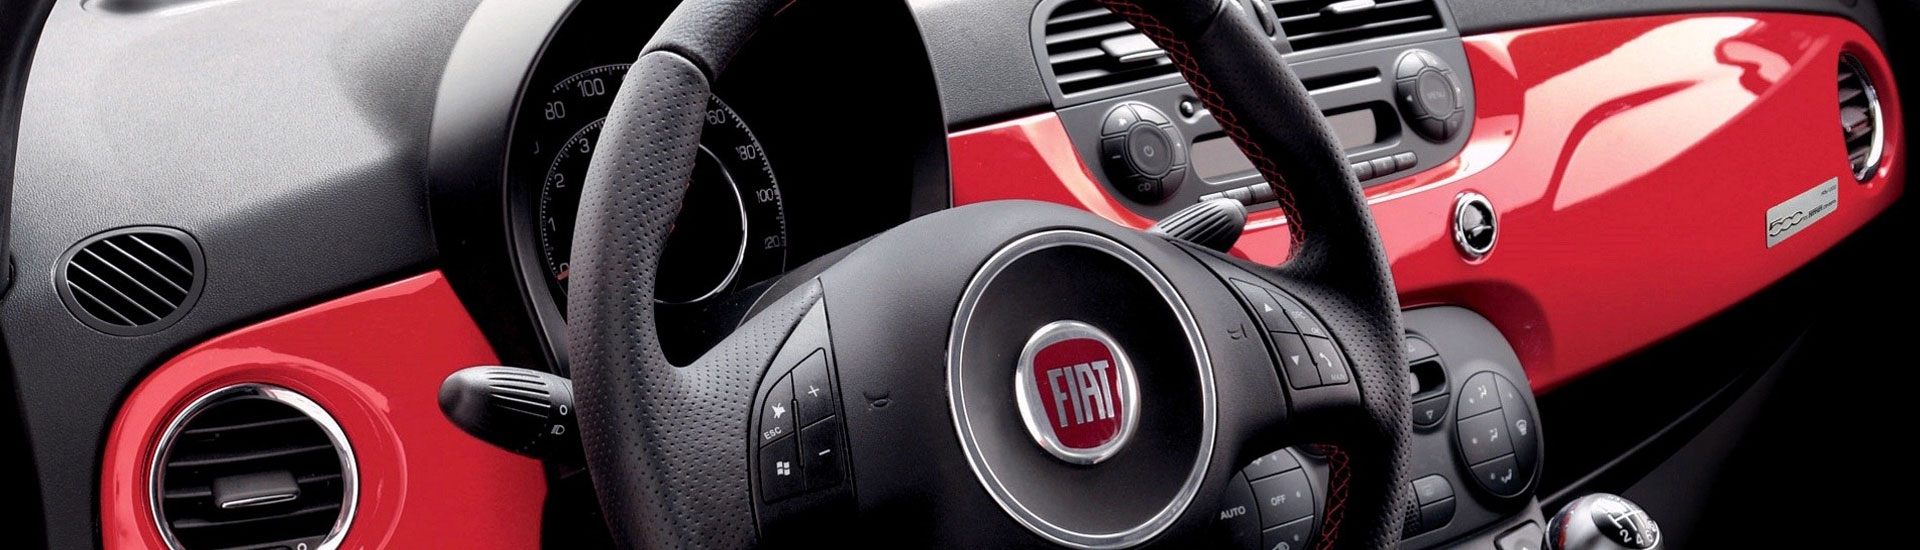 2021 Fiat 500x Custom Dash Kits